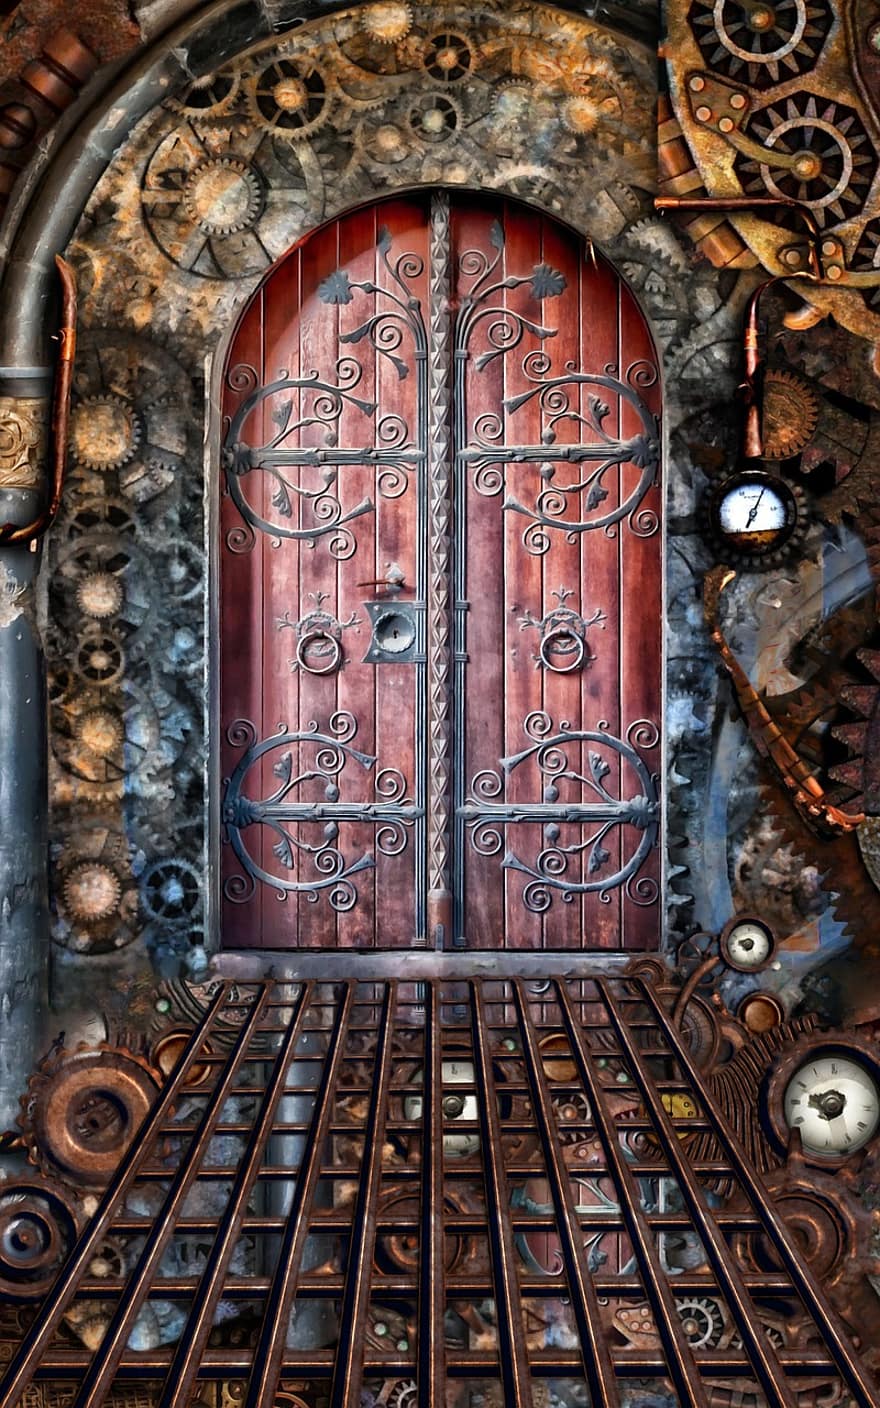 døråbning, gear, bro, steampunk, rust, metal, årgang, portal